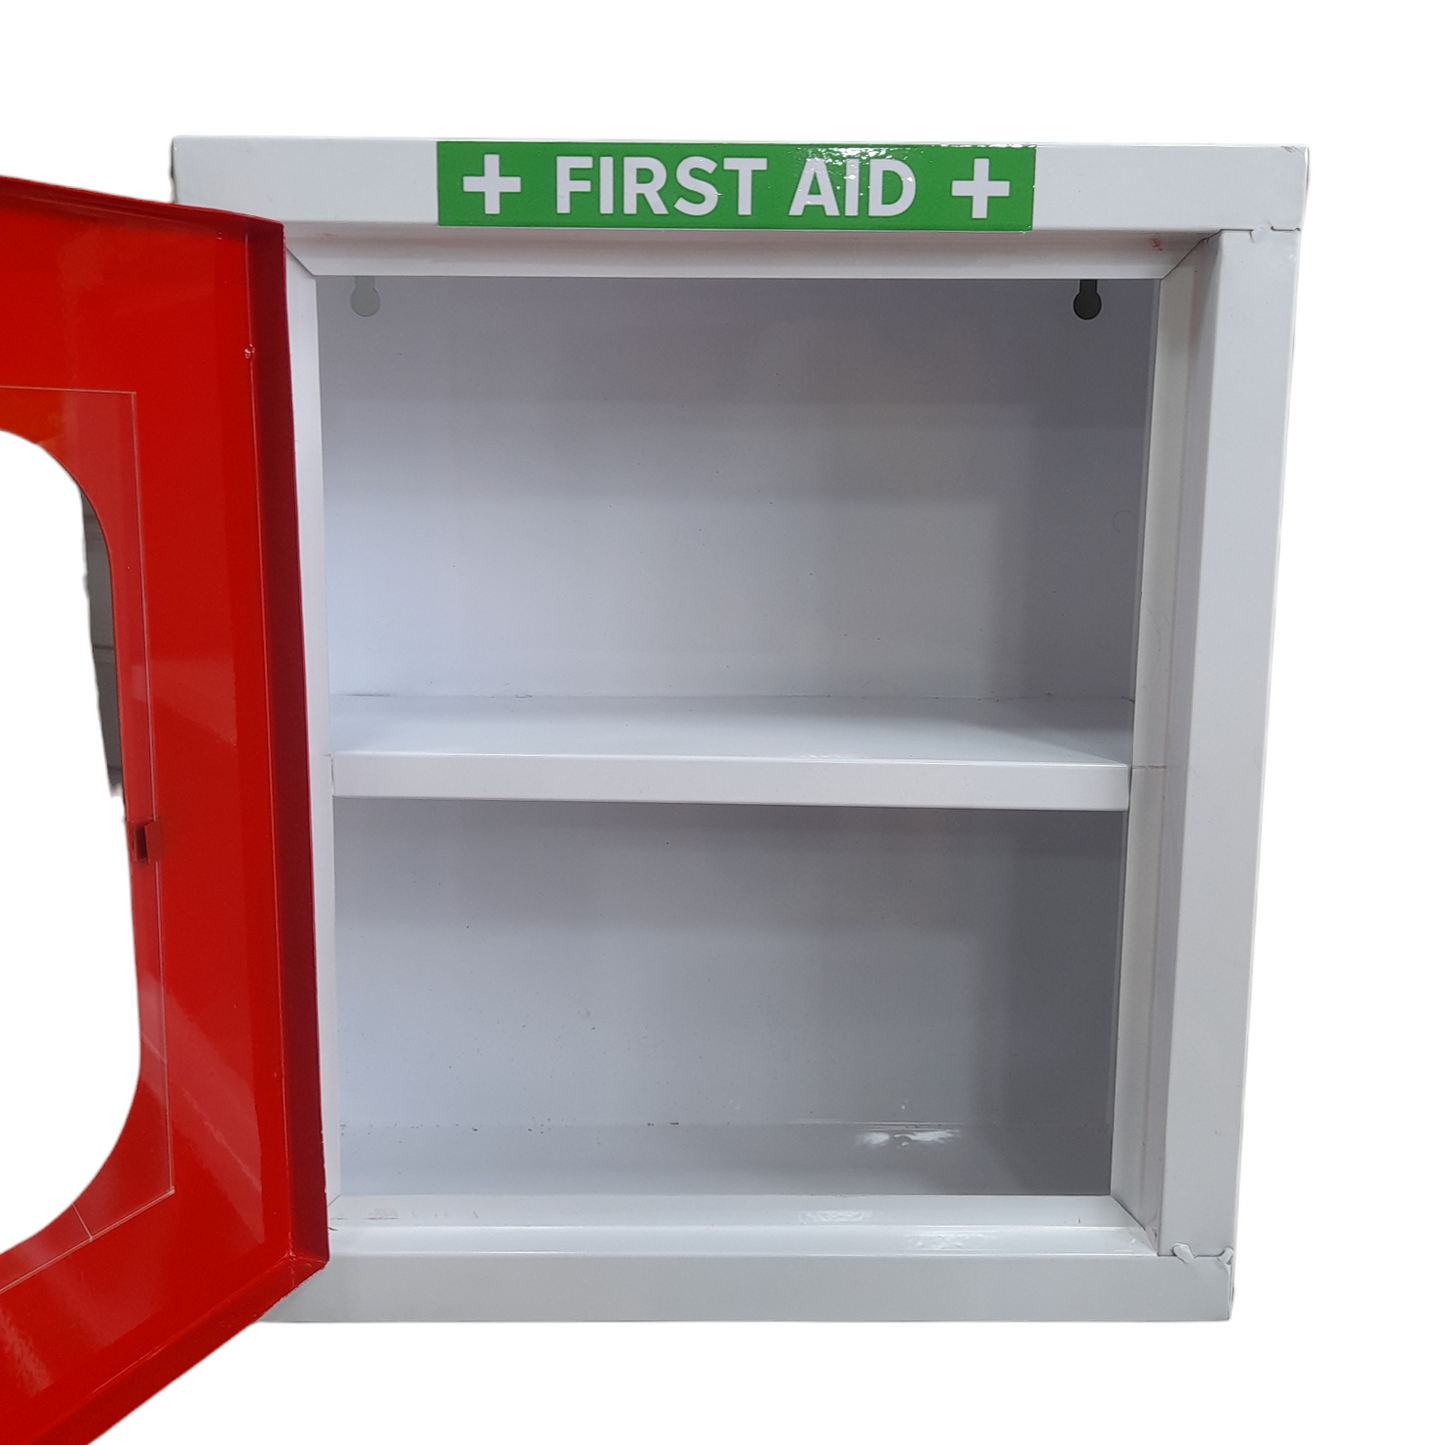 First aid box (Empty)